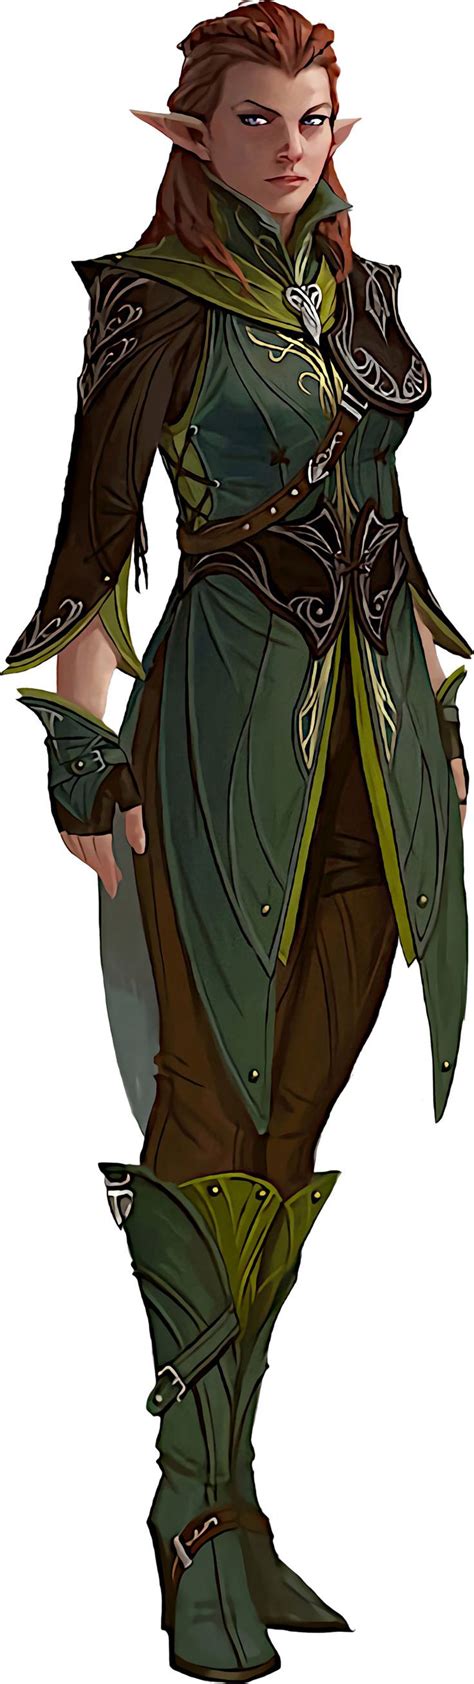 Fey Eladrin S K P Google Pathfinder Character Female Elf Elf Characters